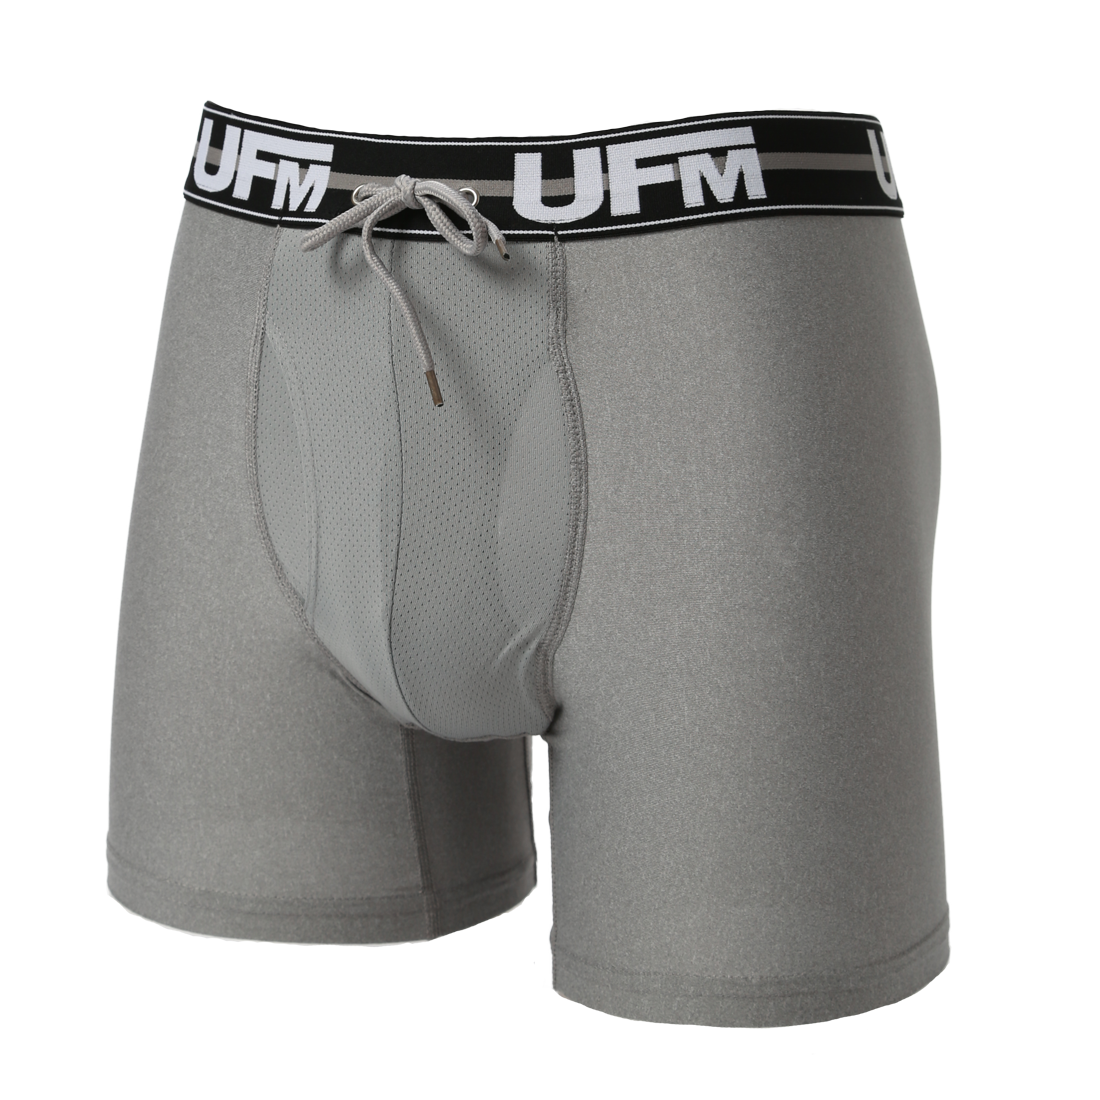  UFM Men's Polyester Trunk, Patented Adjustable Support